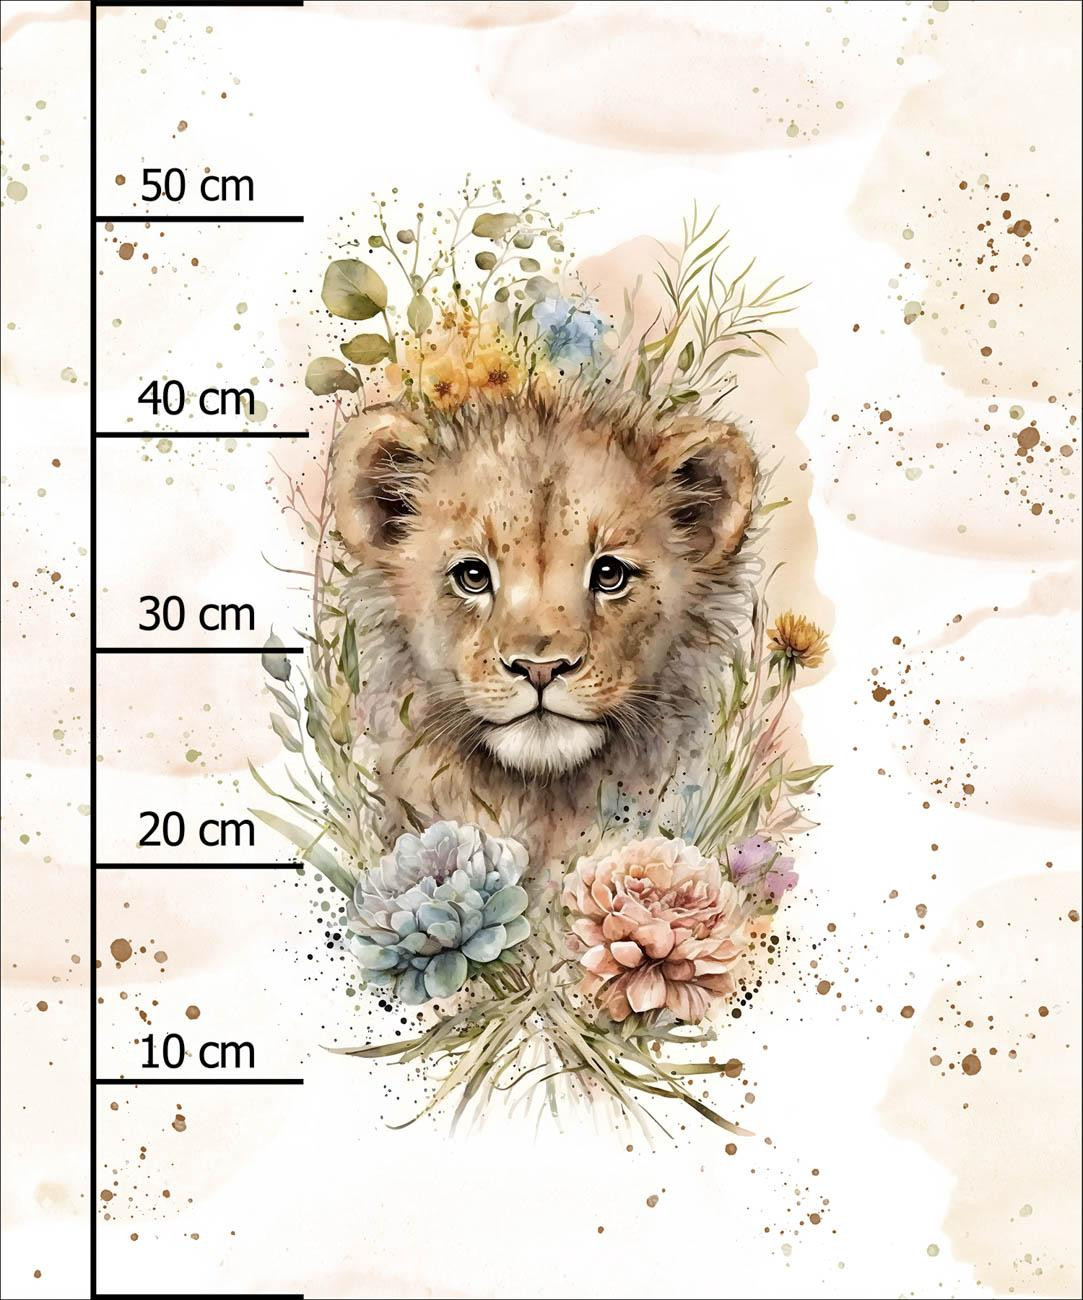 BABY LION - Paneel (60cm x 50cm) Sommersweat